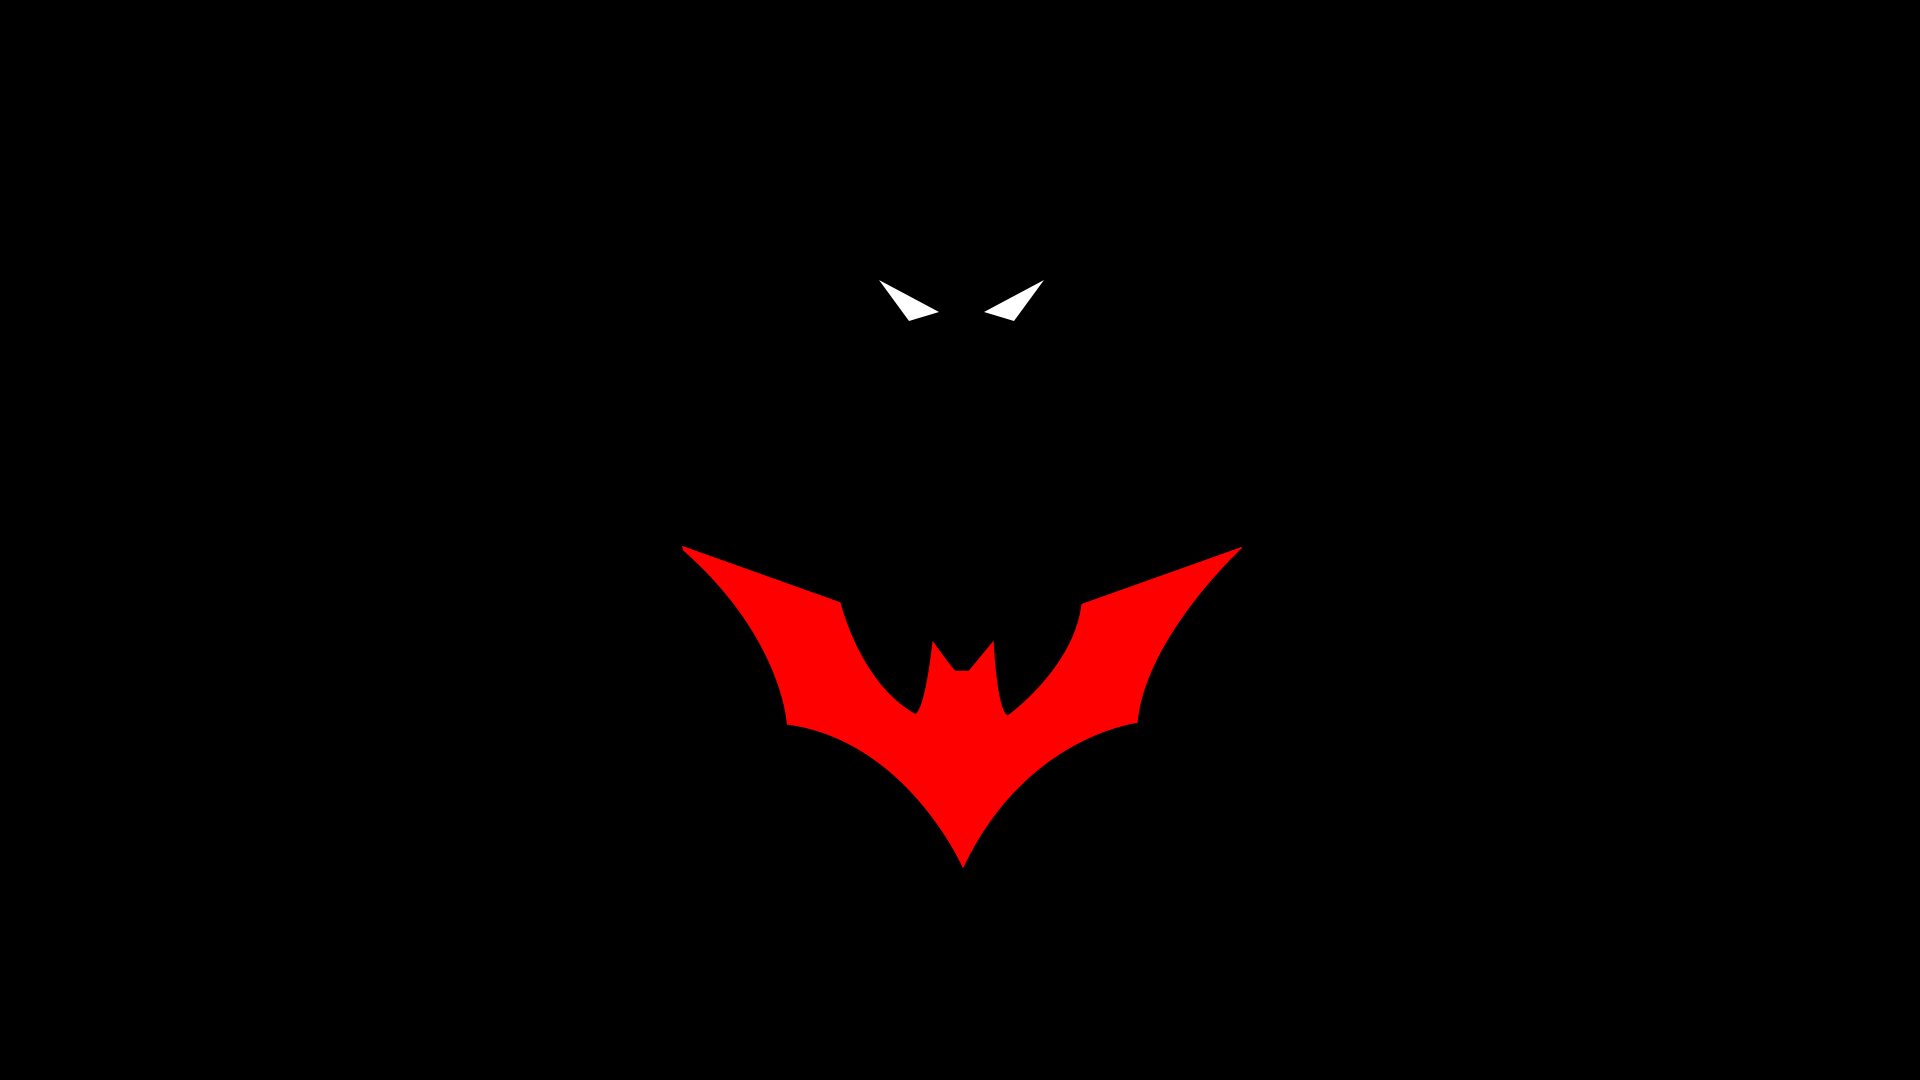 Batman Logo Wallpaper For Desktop 1080p 131